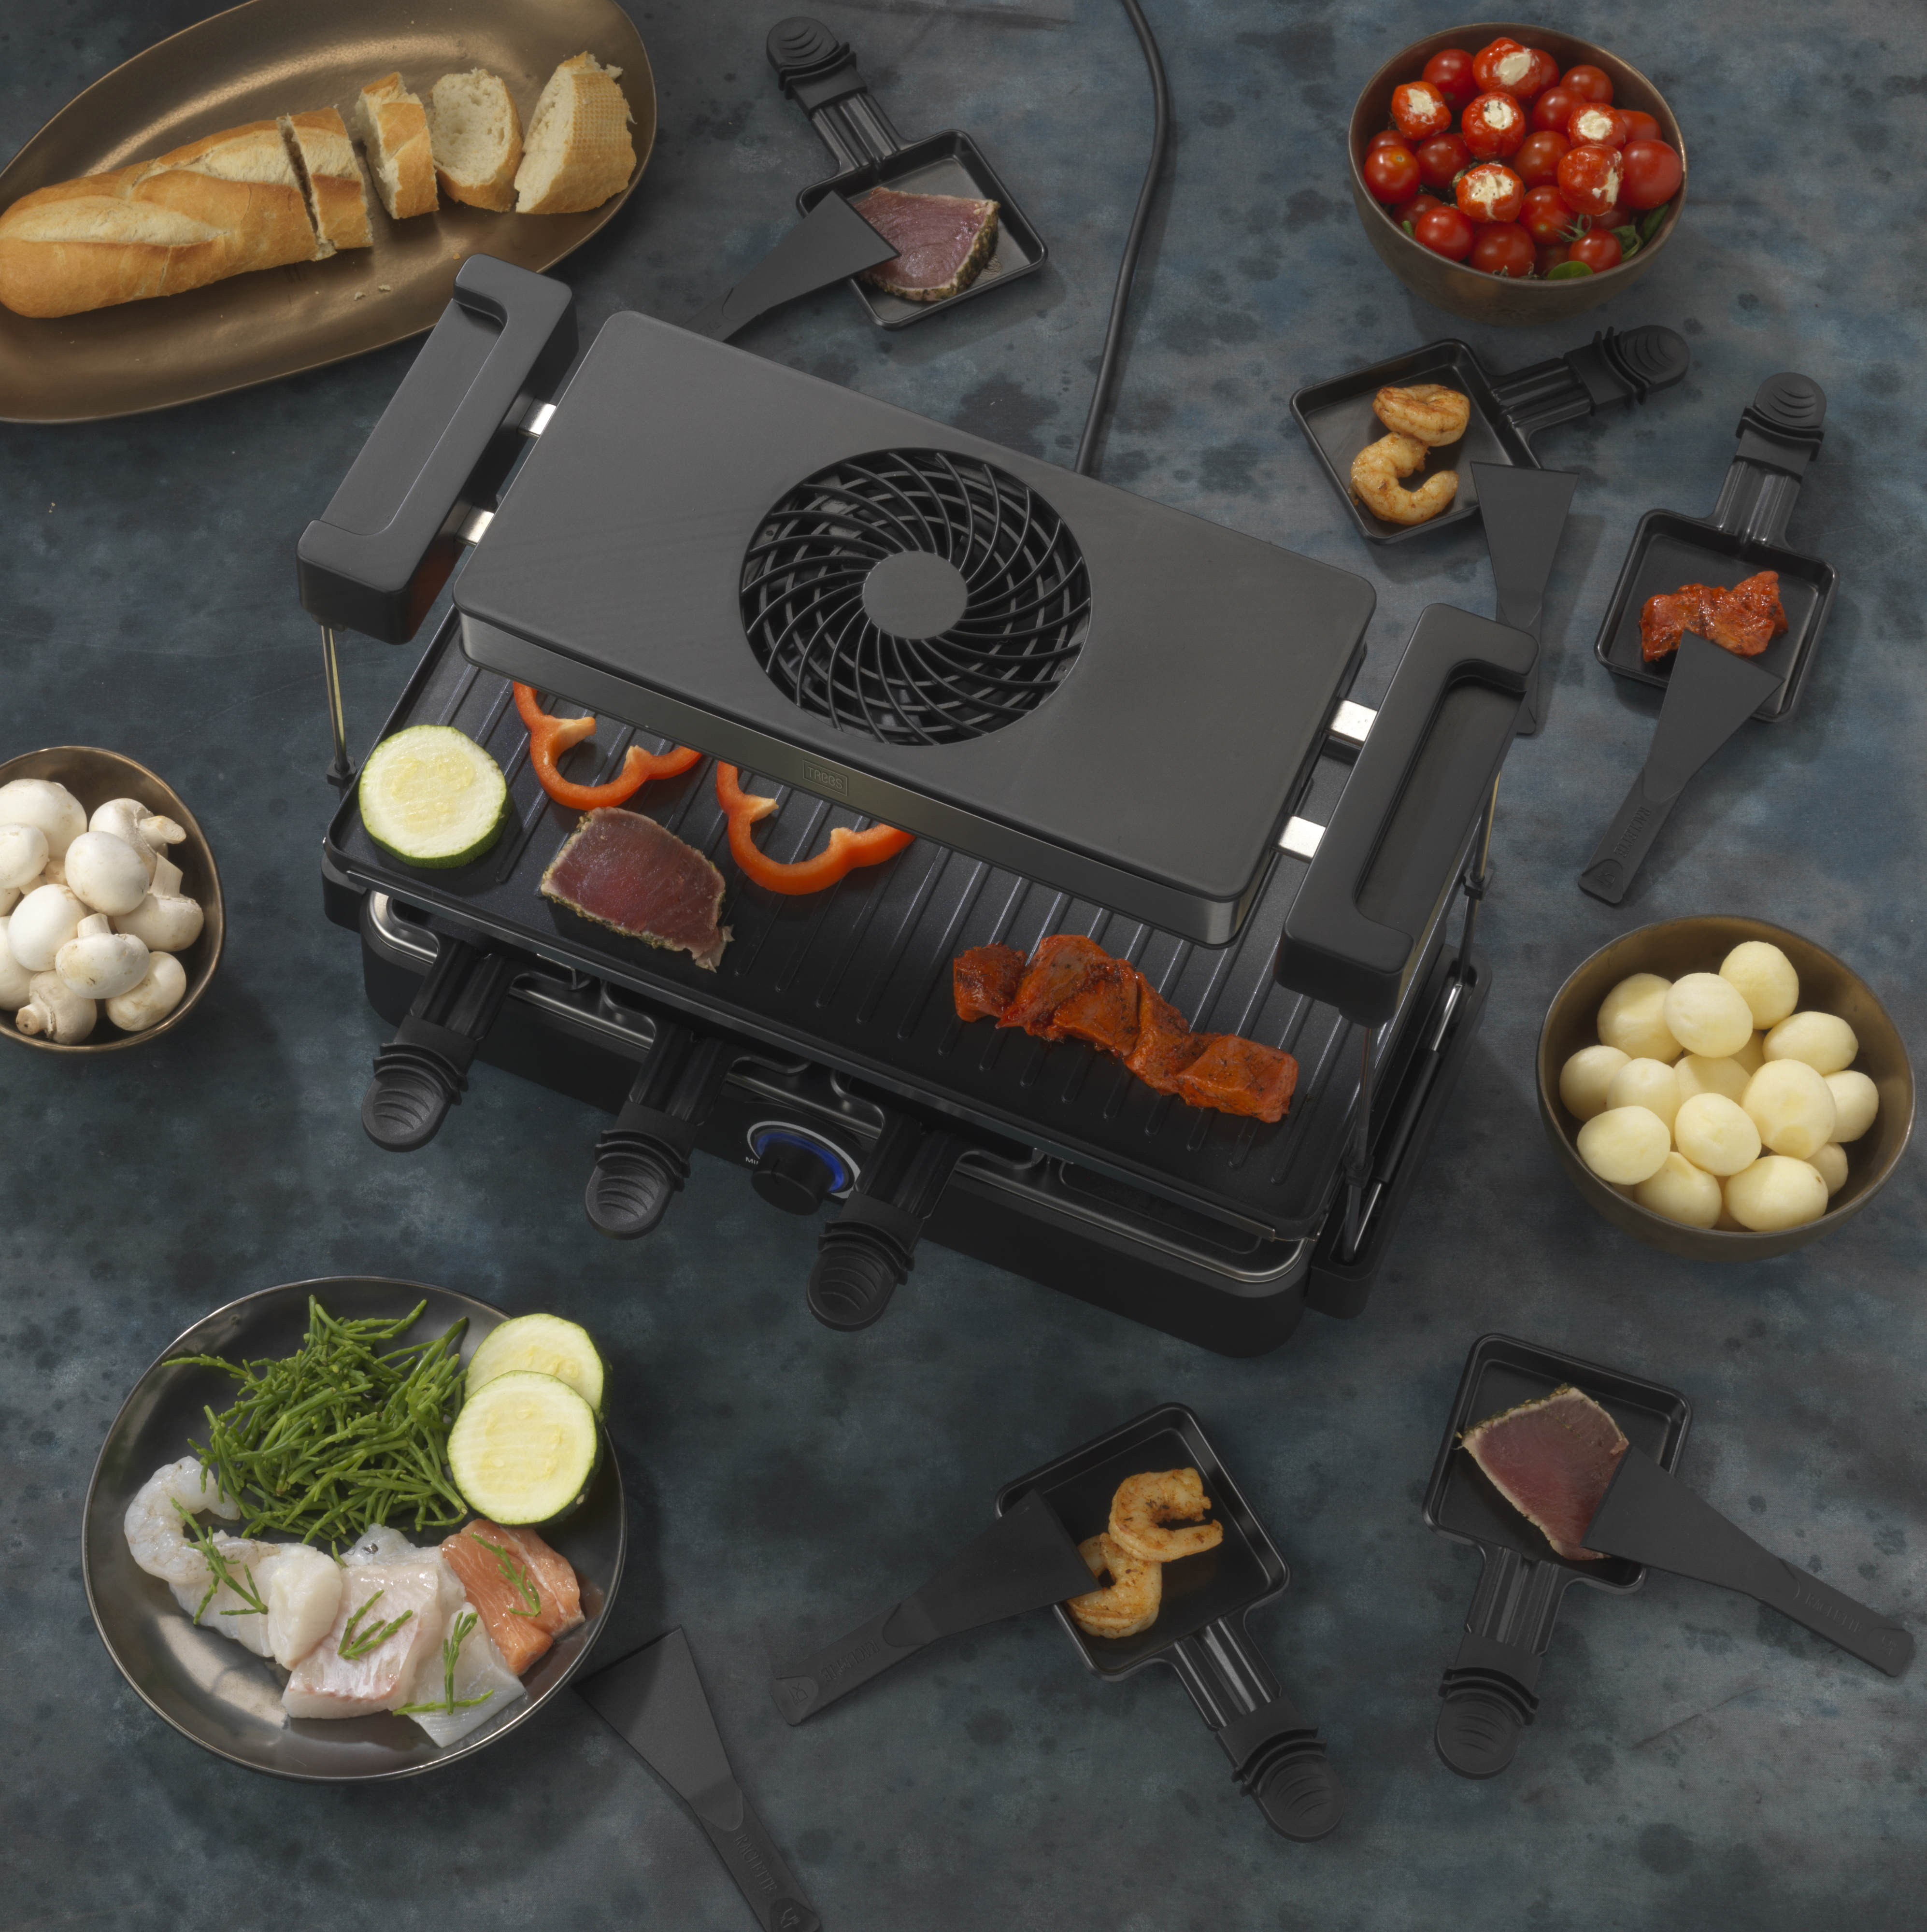 TREBS 15110 - Gourmet-Chefgrill mit Raclette Dunstabzug 